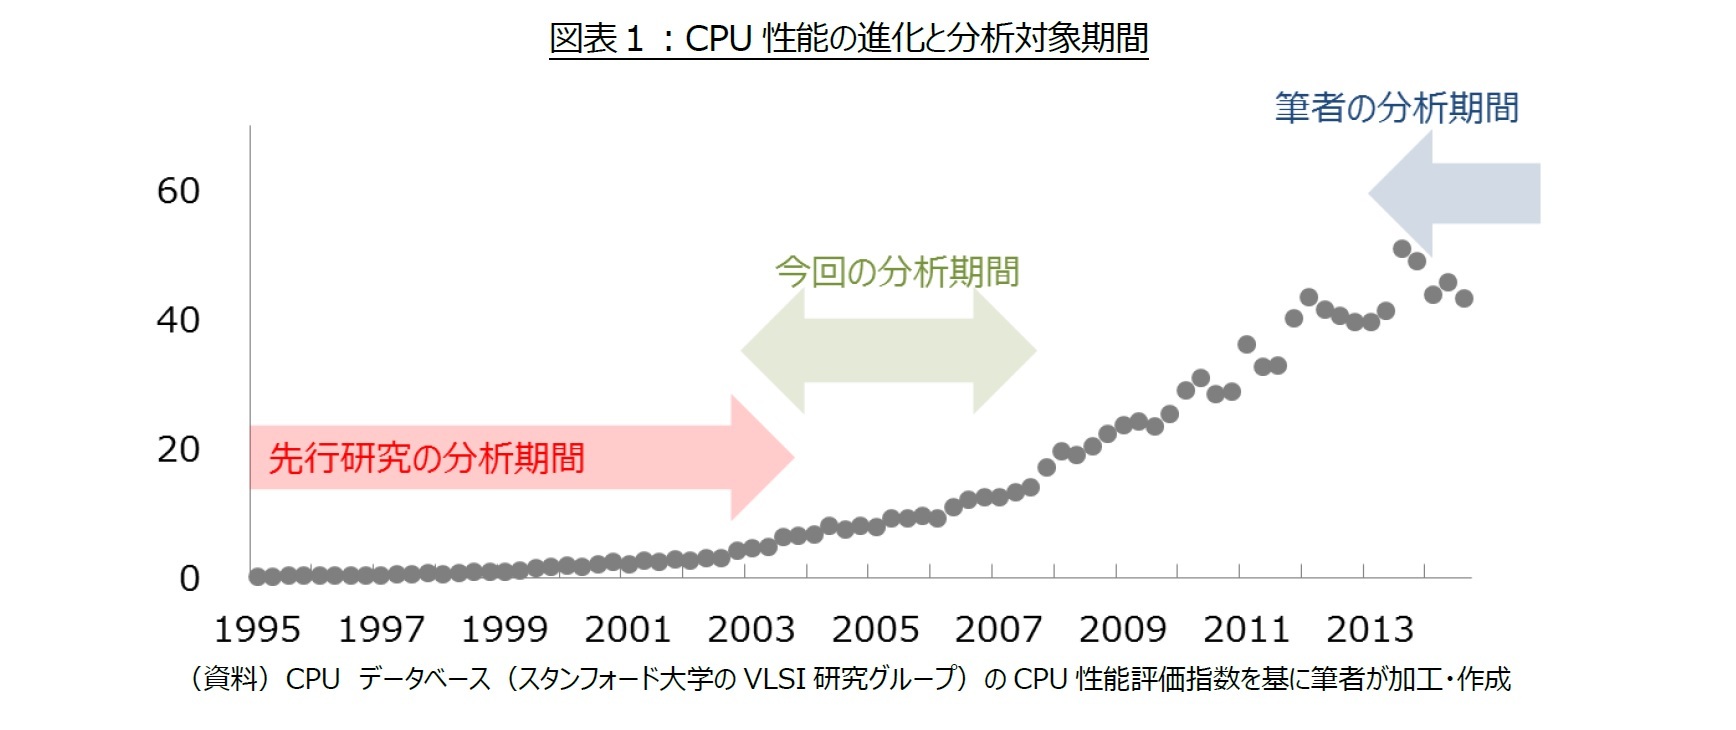 図表１：CPU性能の進化と分析対象期間